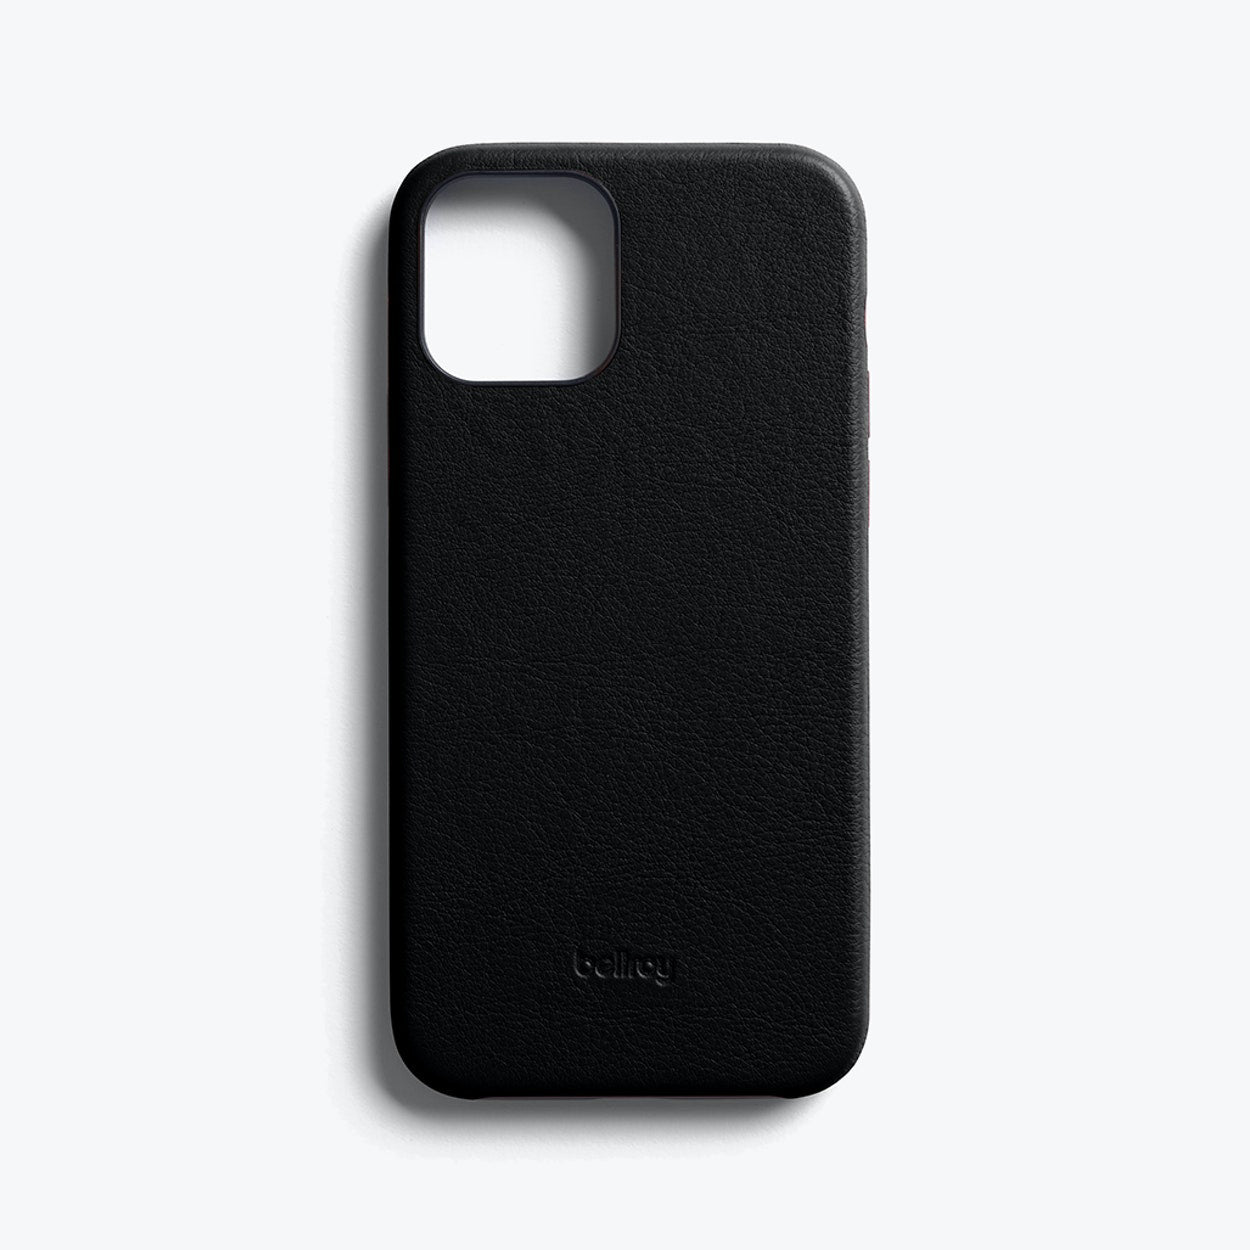 Bellroy Slim Genuine Leather Case For iPhone iPhone 12 mini - BLACK - Mac Addict